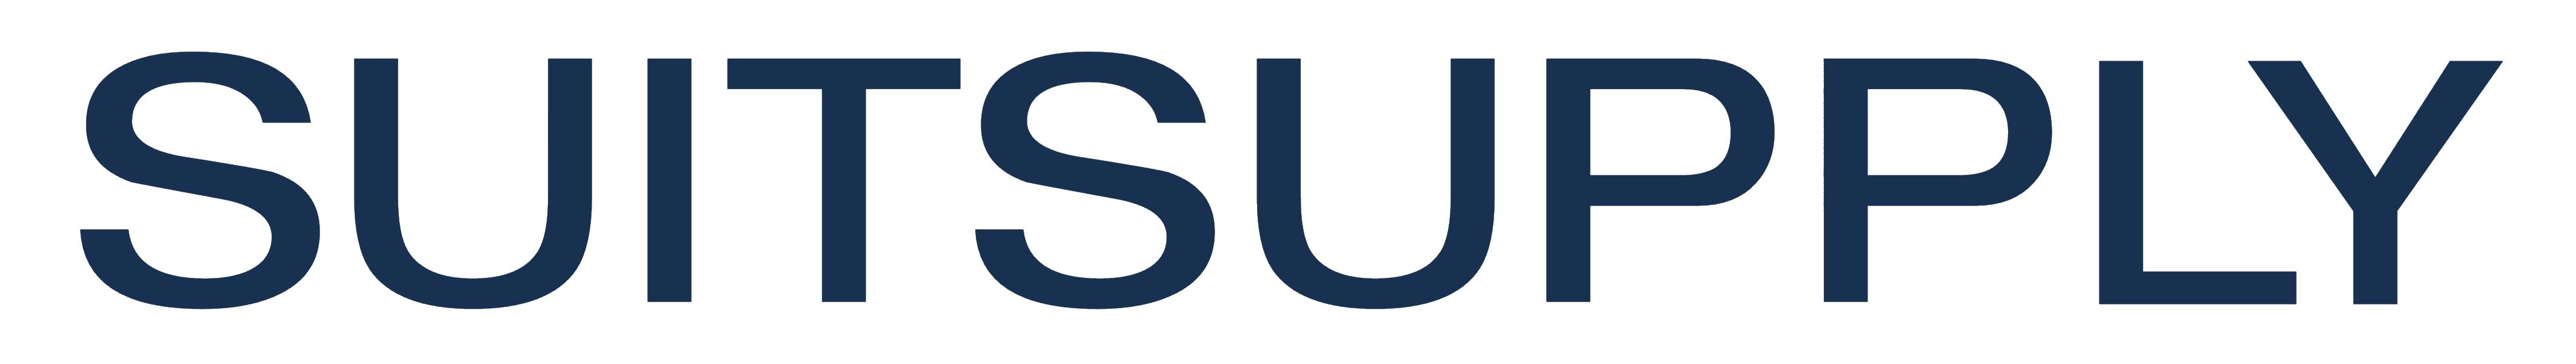 Suitsupply logo, logotype